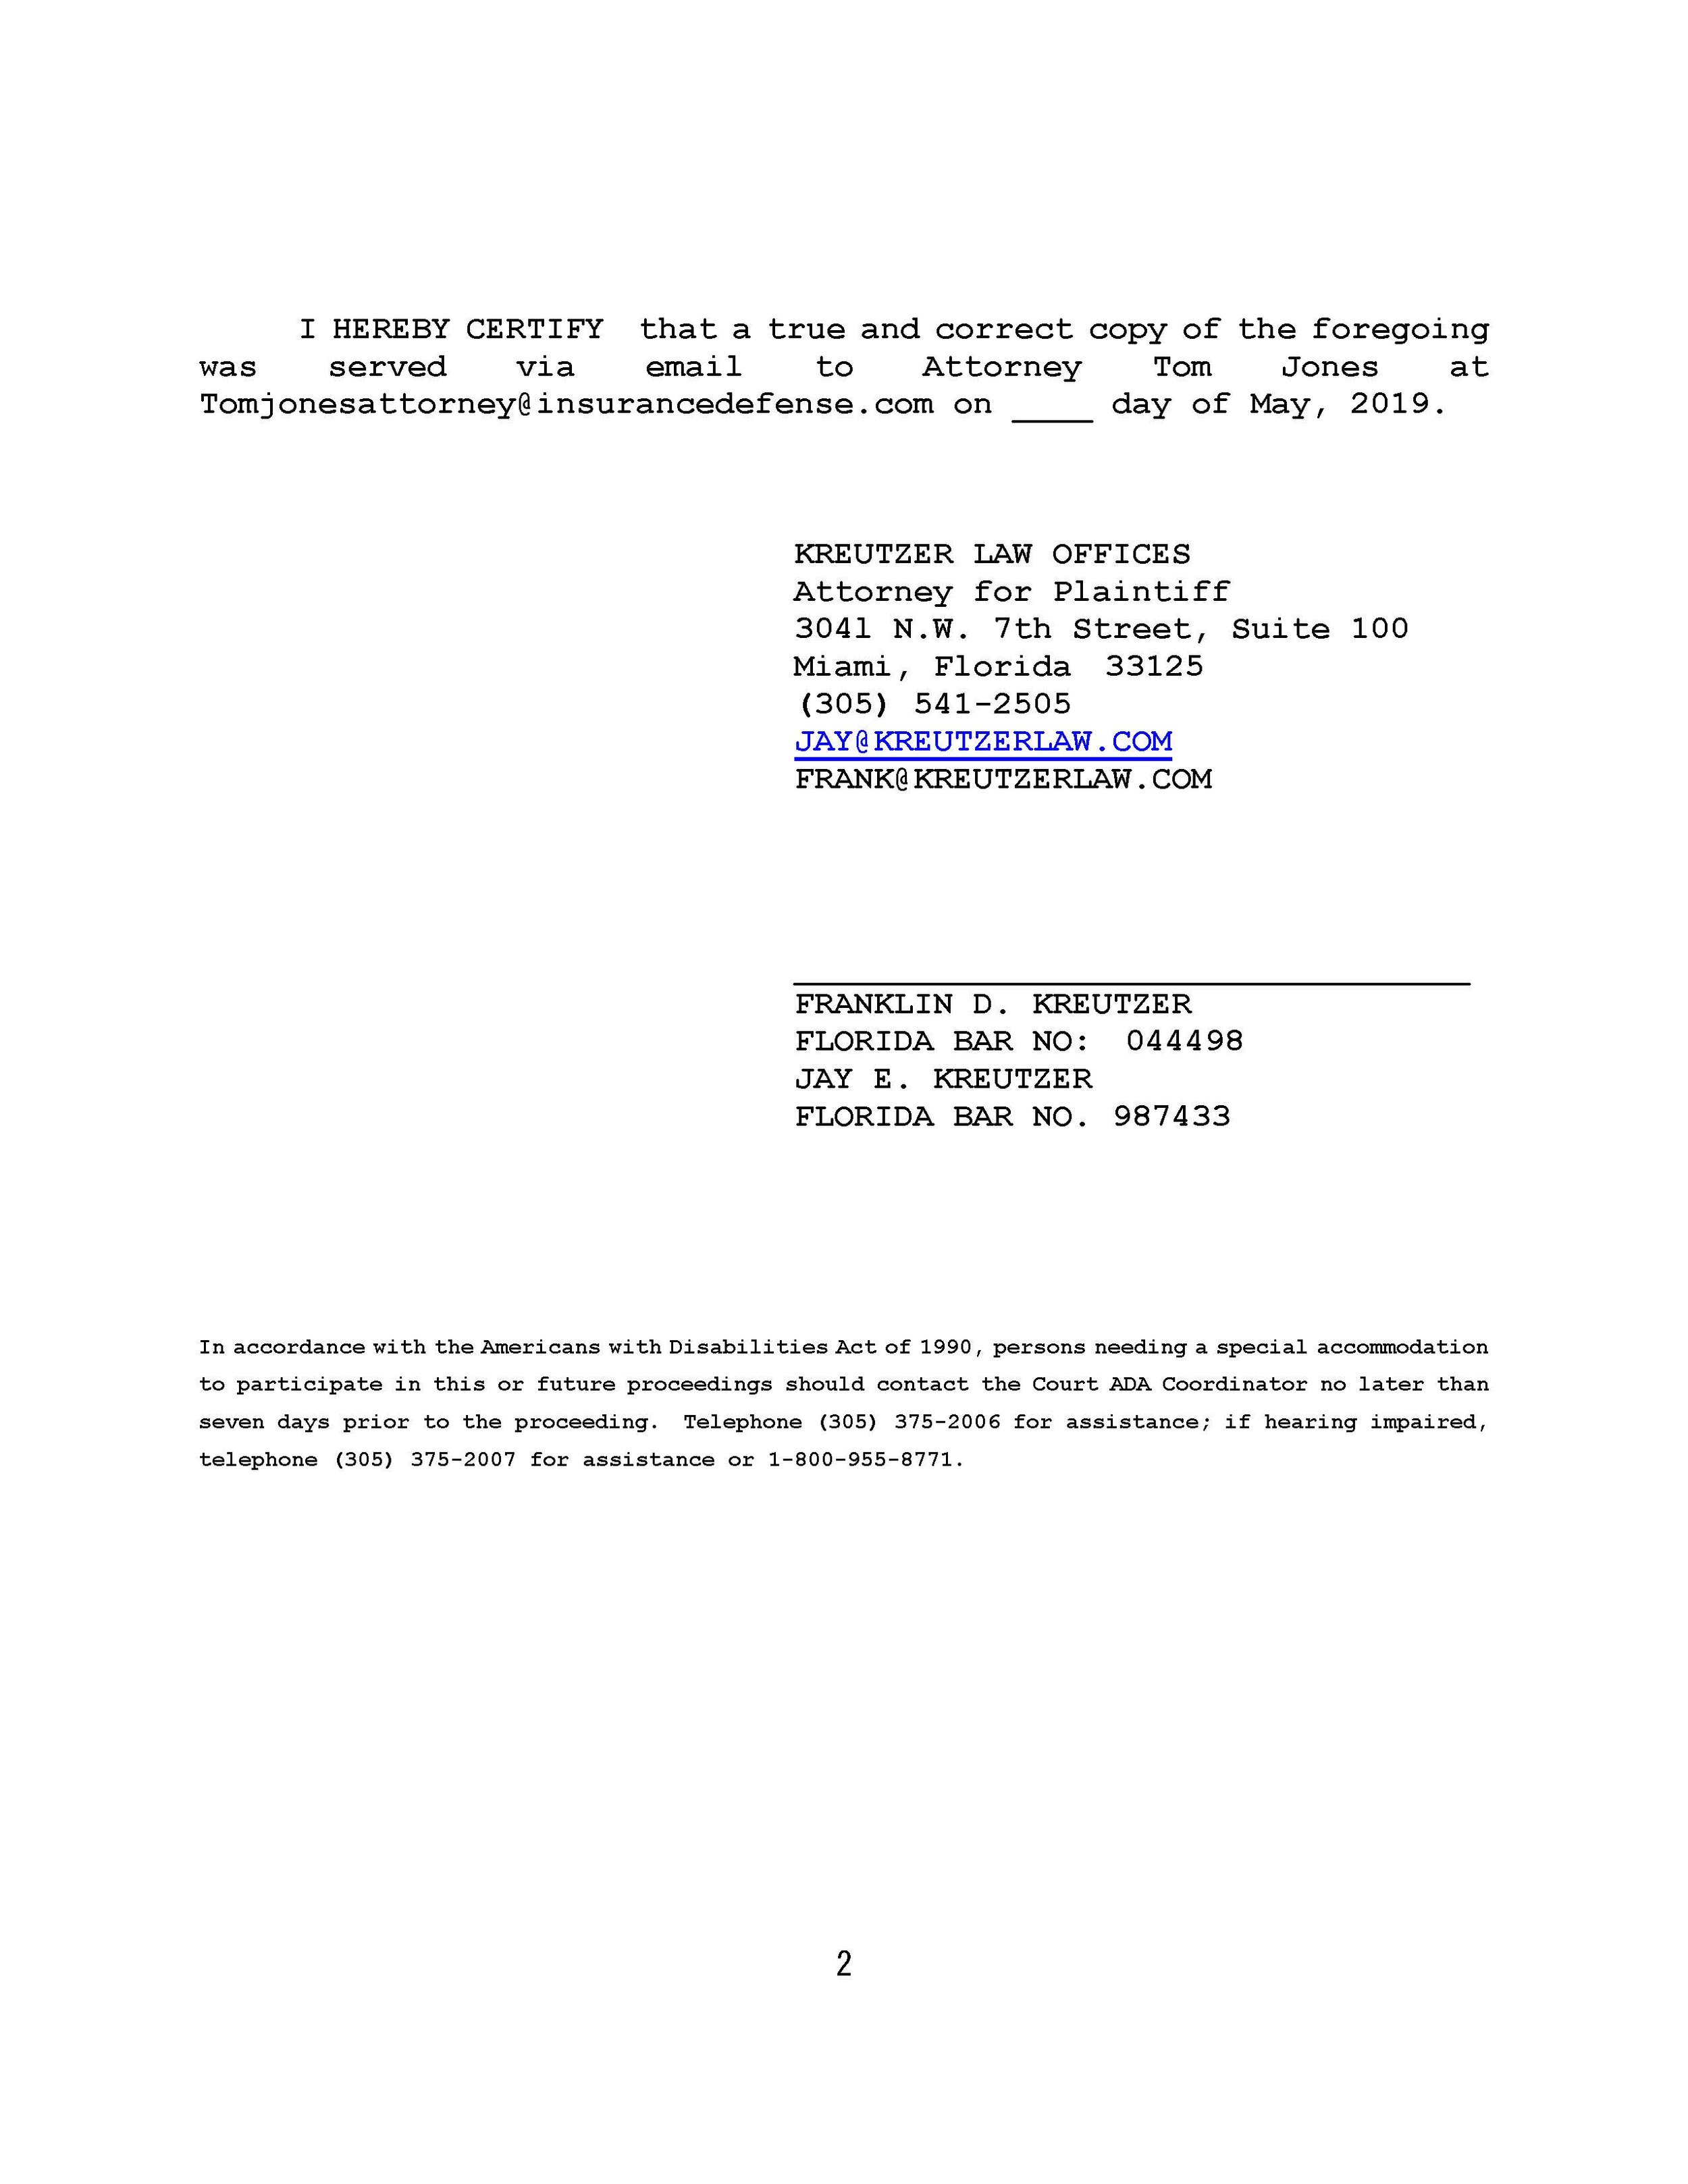 Kreutzer-Law-Attorney-Miami-Lawyers-Depo notice.not_Page_2.jpg